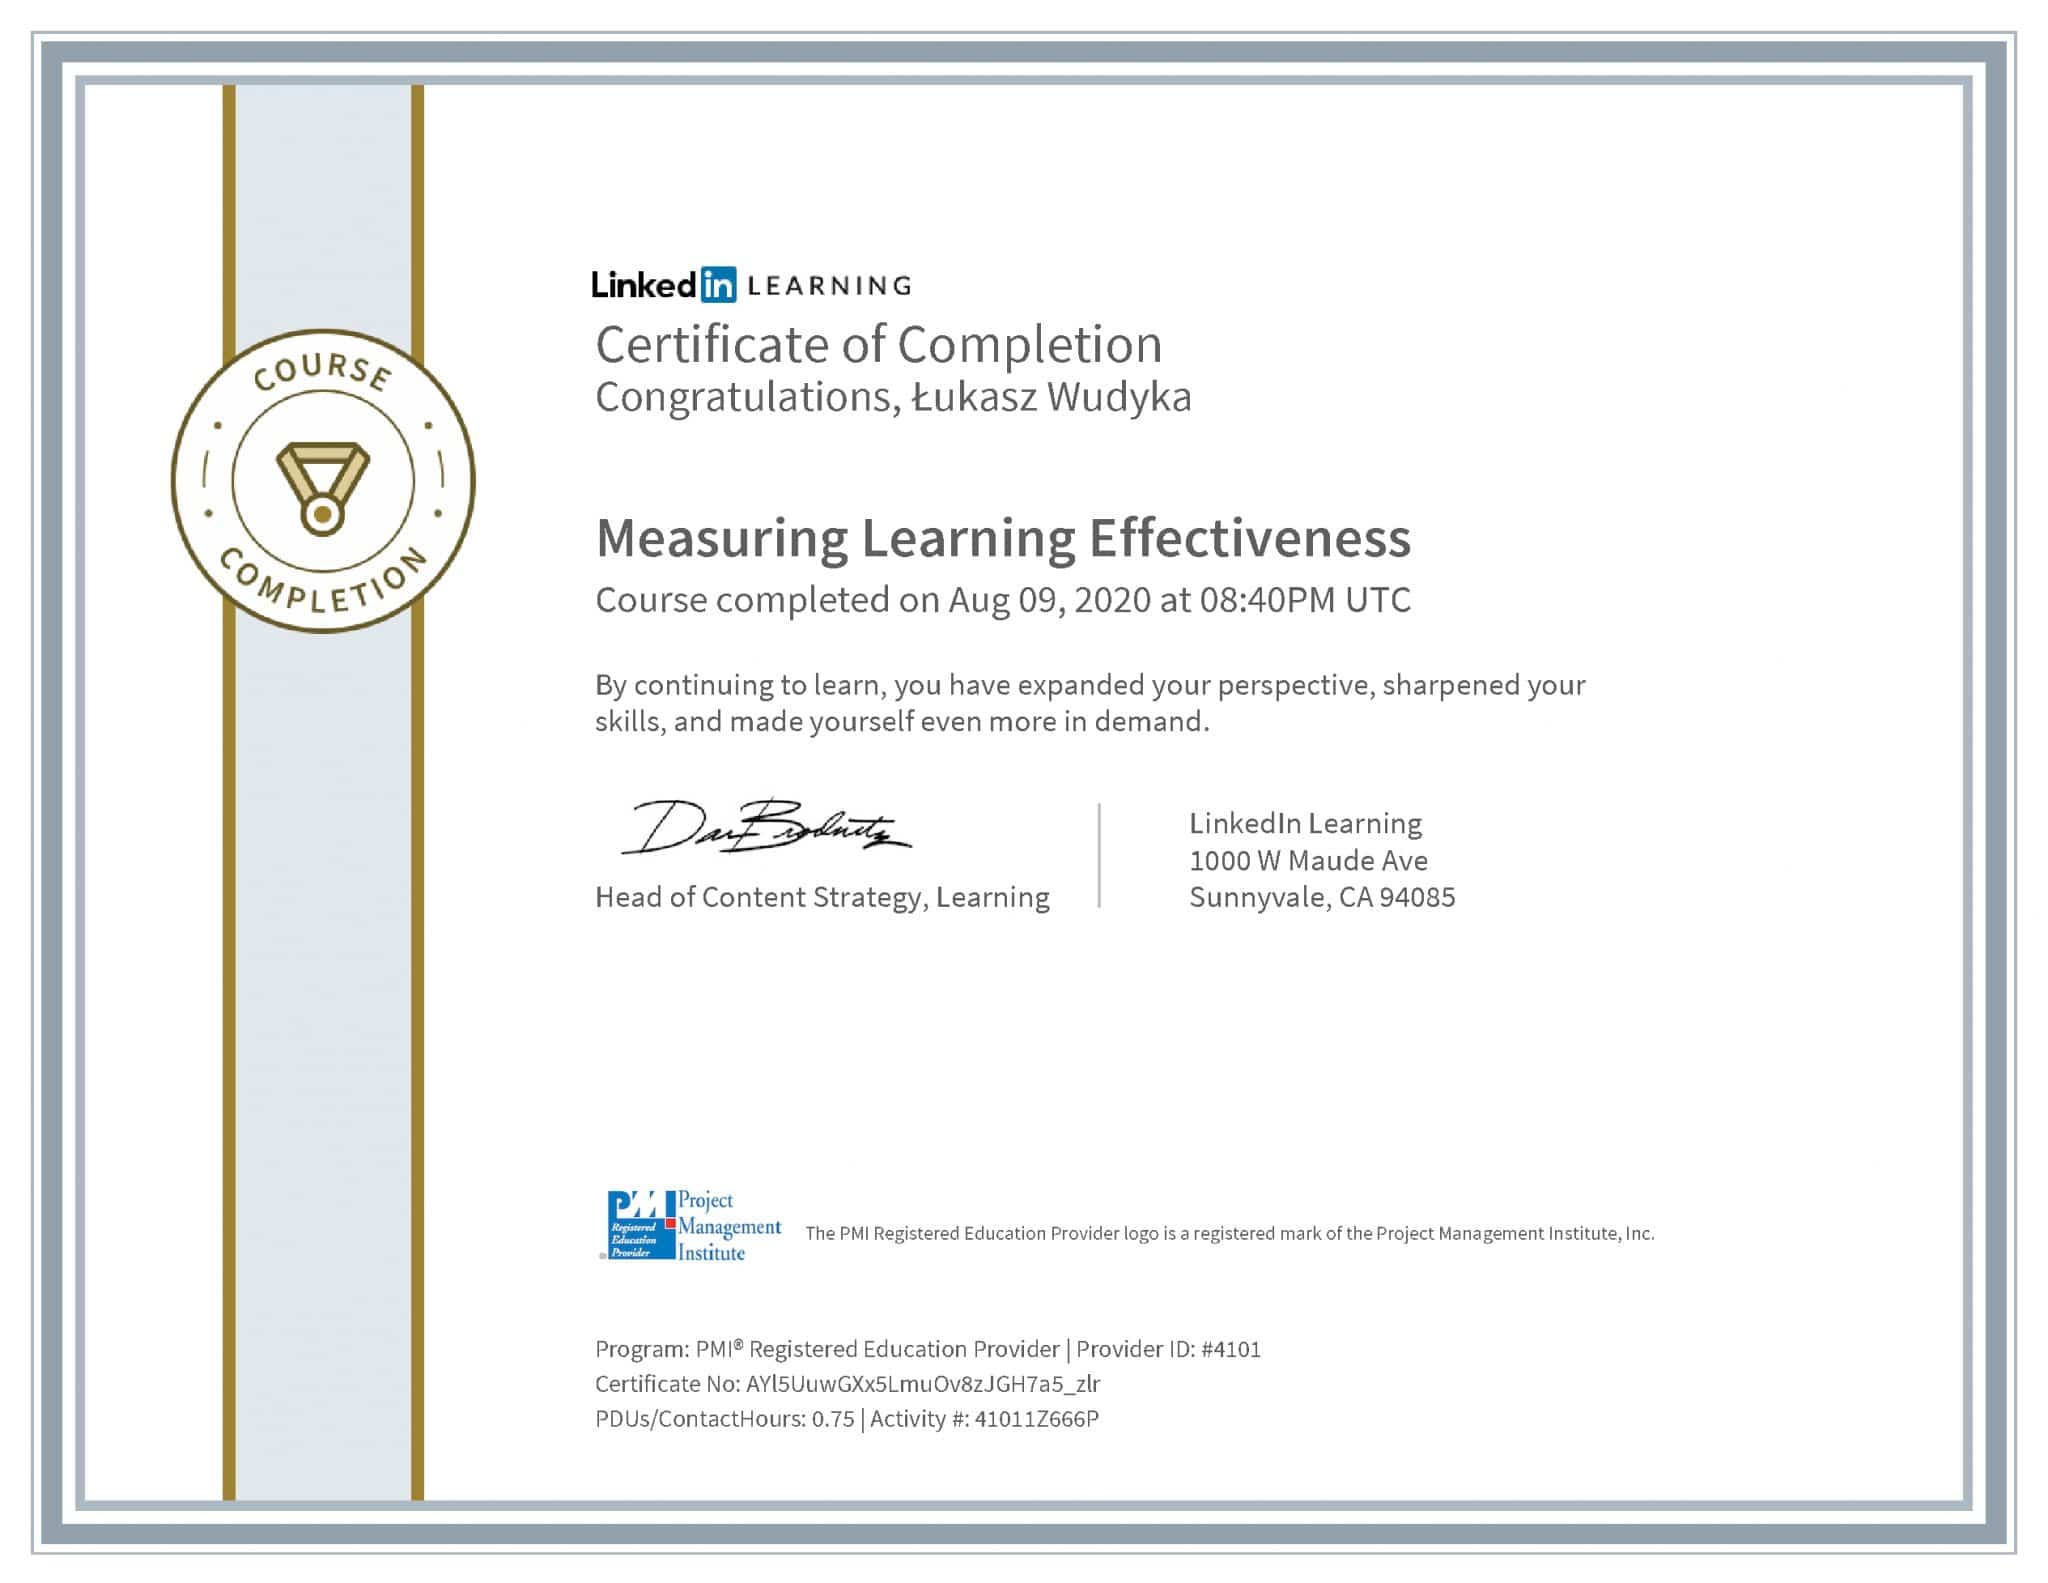 Łukasz Wudyka certyfikat LinkedIn Measuring Learning Effectiveness PMI